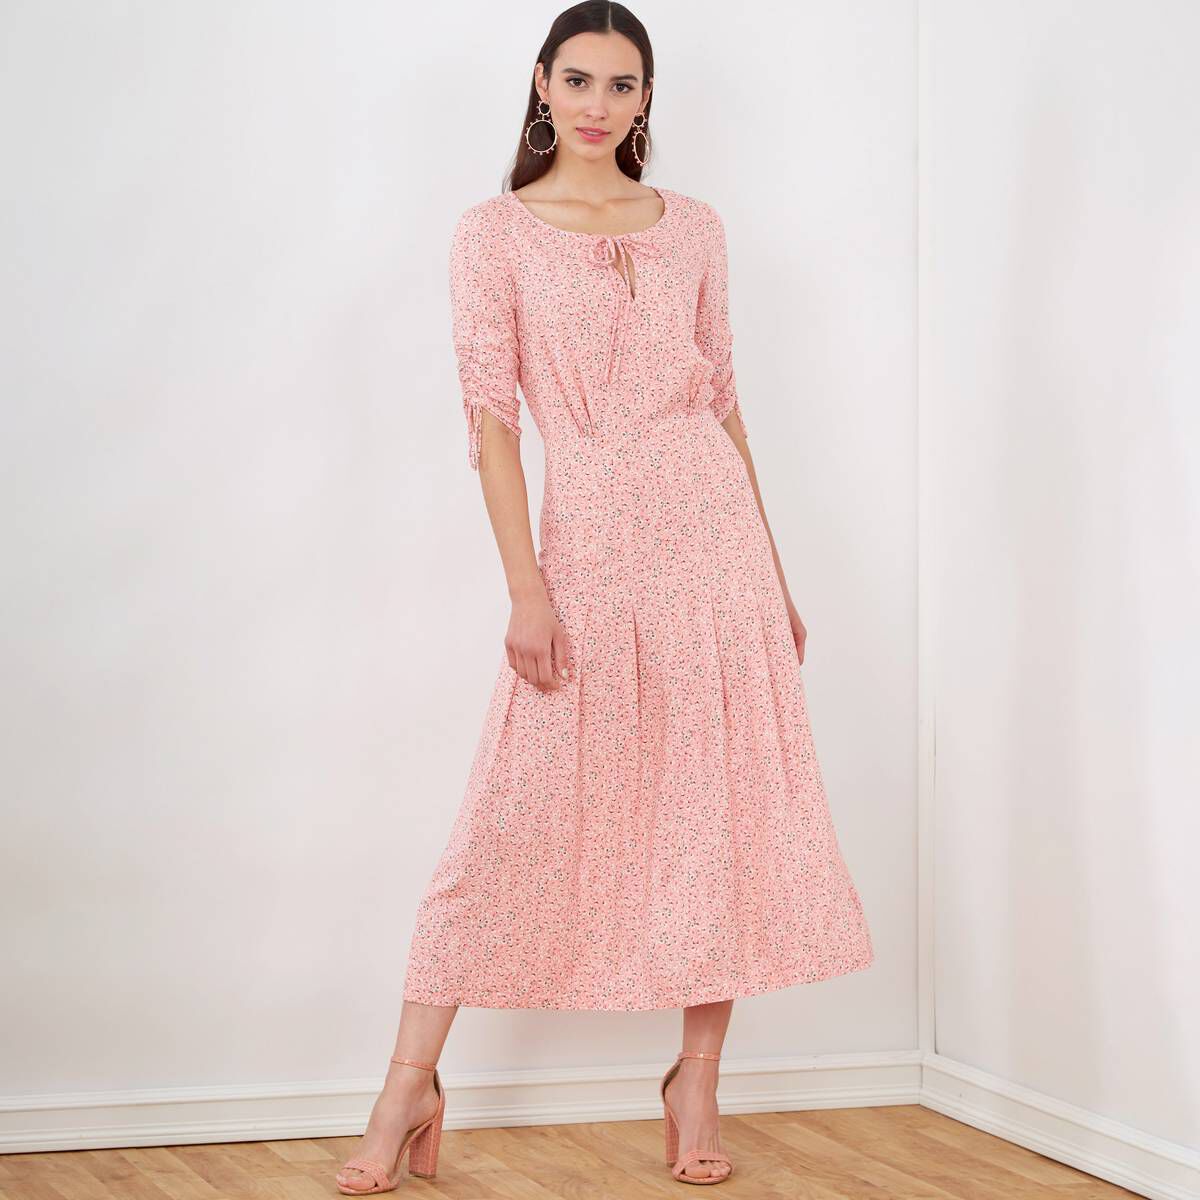 New Look Women’s Dress Sewing Pattern N6695 | Hobbycraft